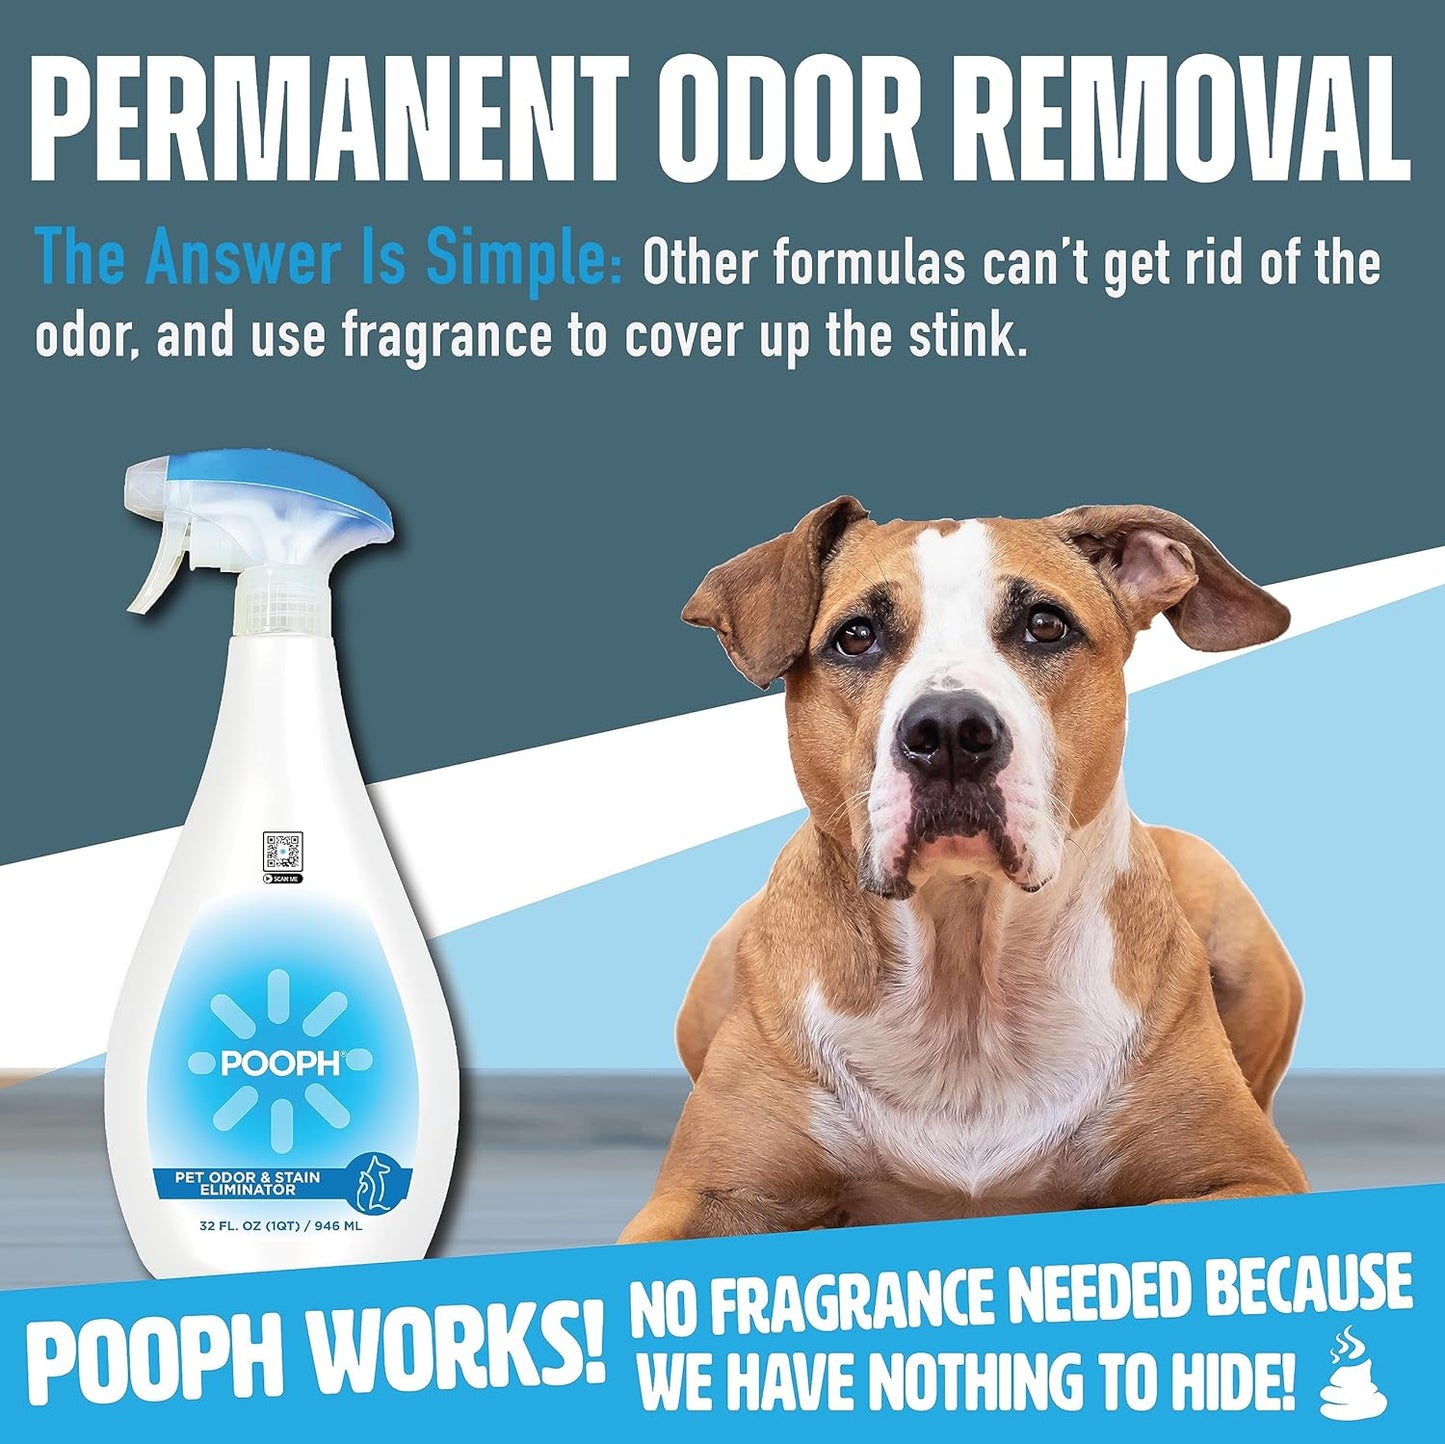 Pet Odor Eliminator, 32Oz Spray - Dismantles Odors on a Molecular Basis, Dogs, Cats, Freshener, Urine, Poop, Pee, Deodorizer, Natures, Puppy, Fresh, Clean, Furniture, Potty, Safe